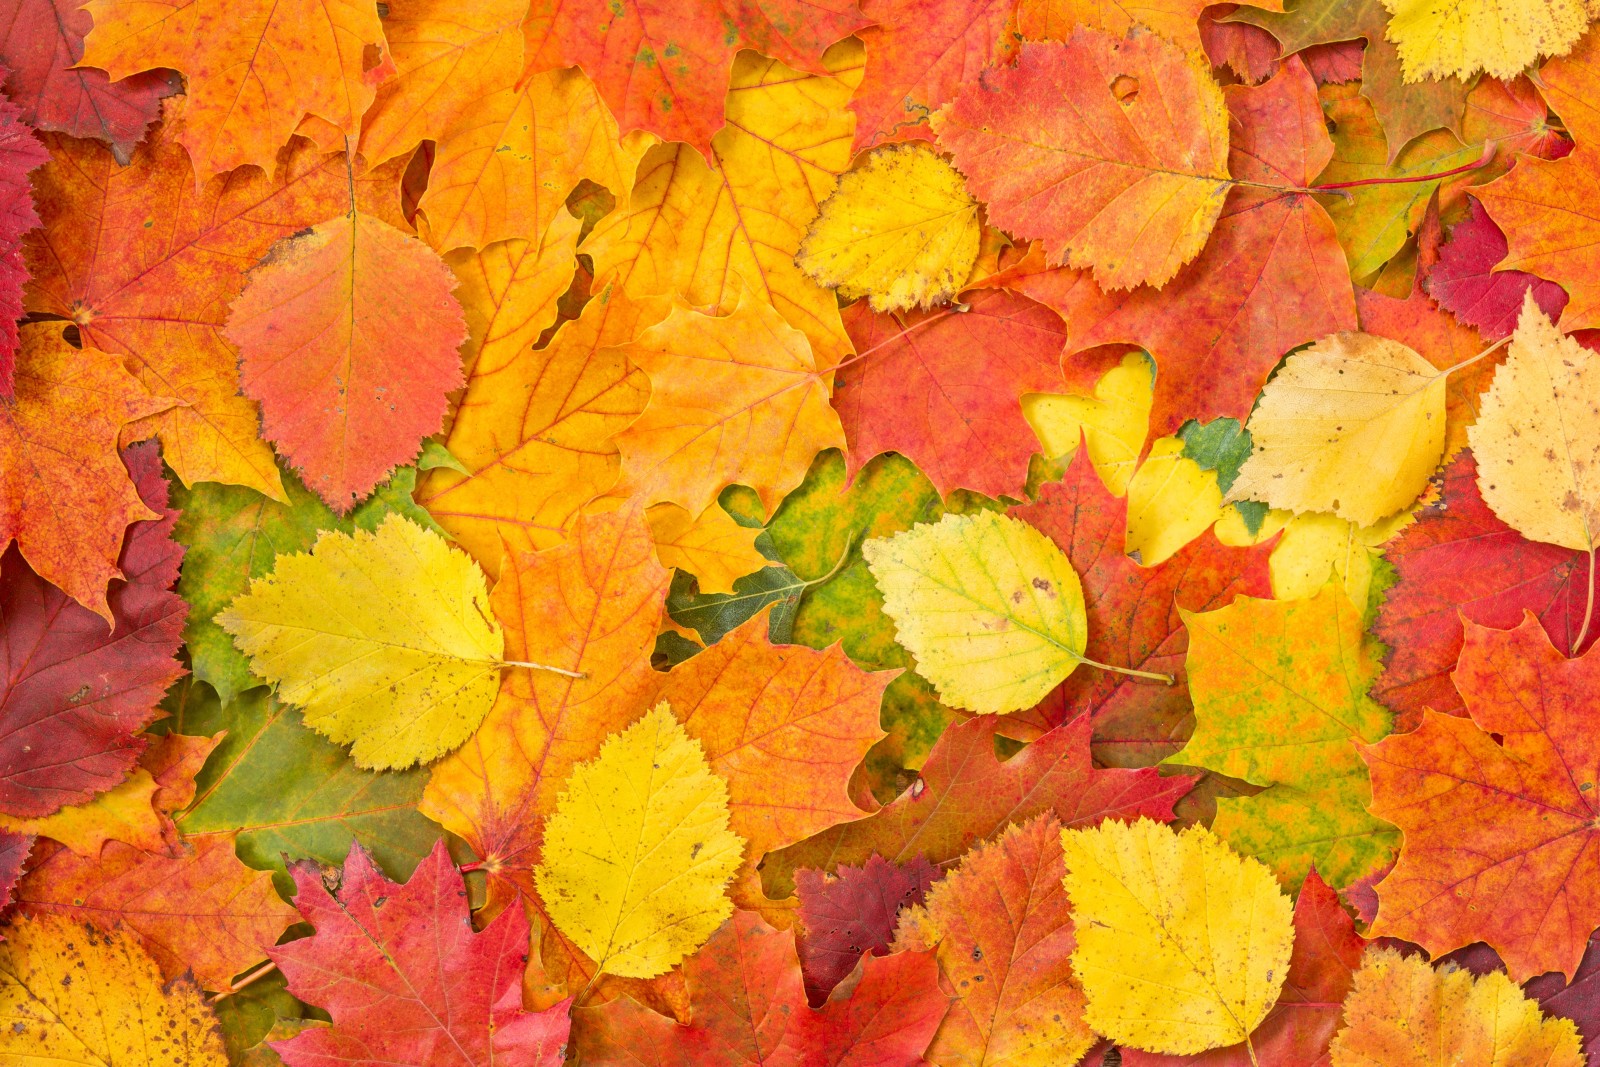 musim gugur, Latar Belakang, Daun-daun, dedaunan musim gugur